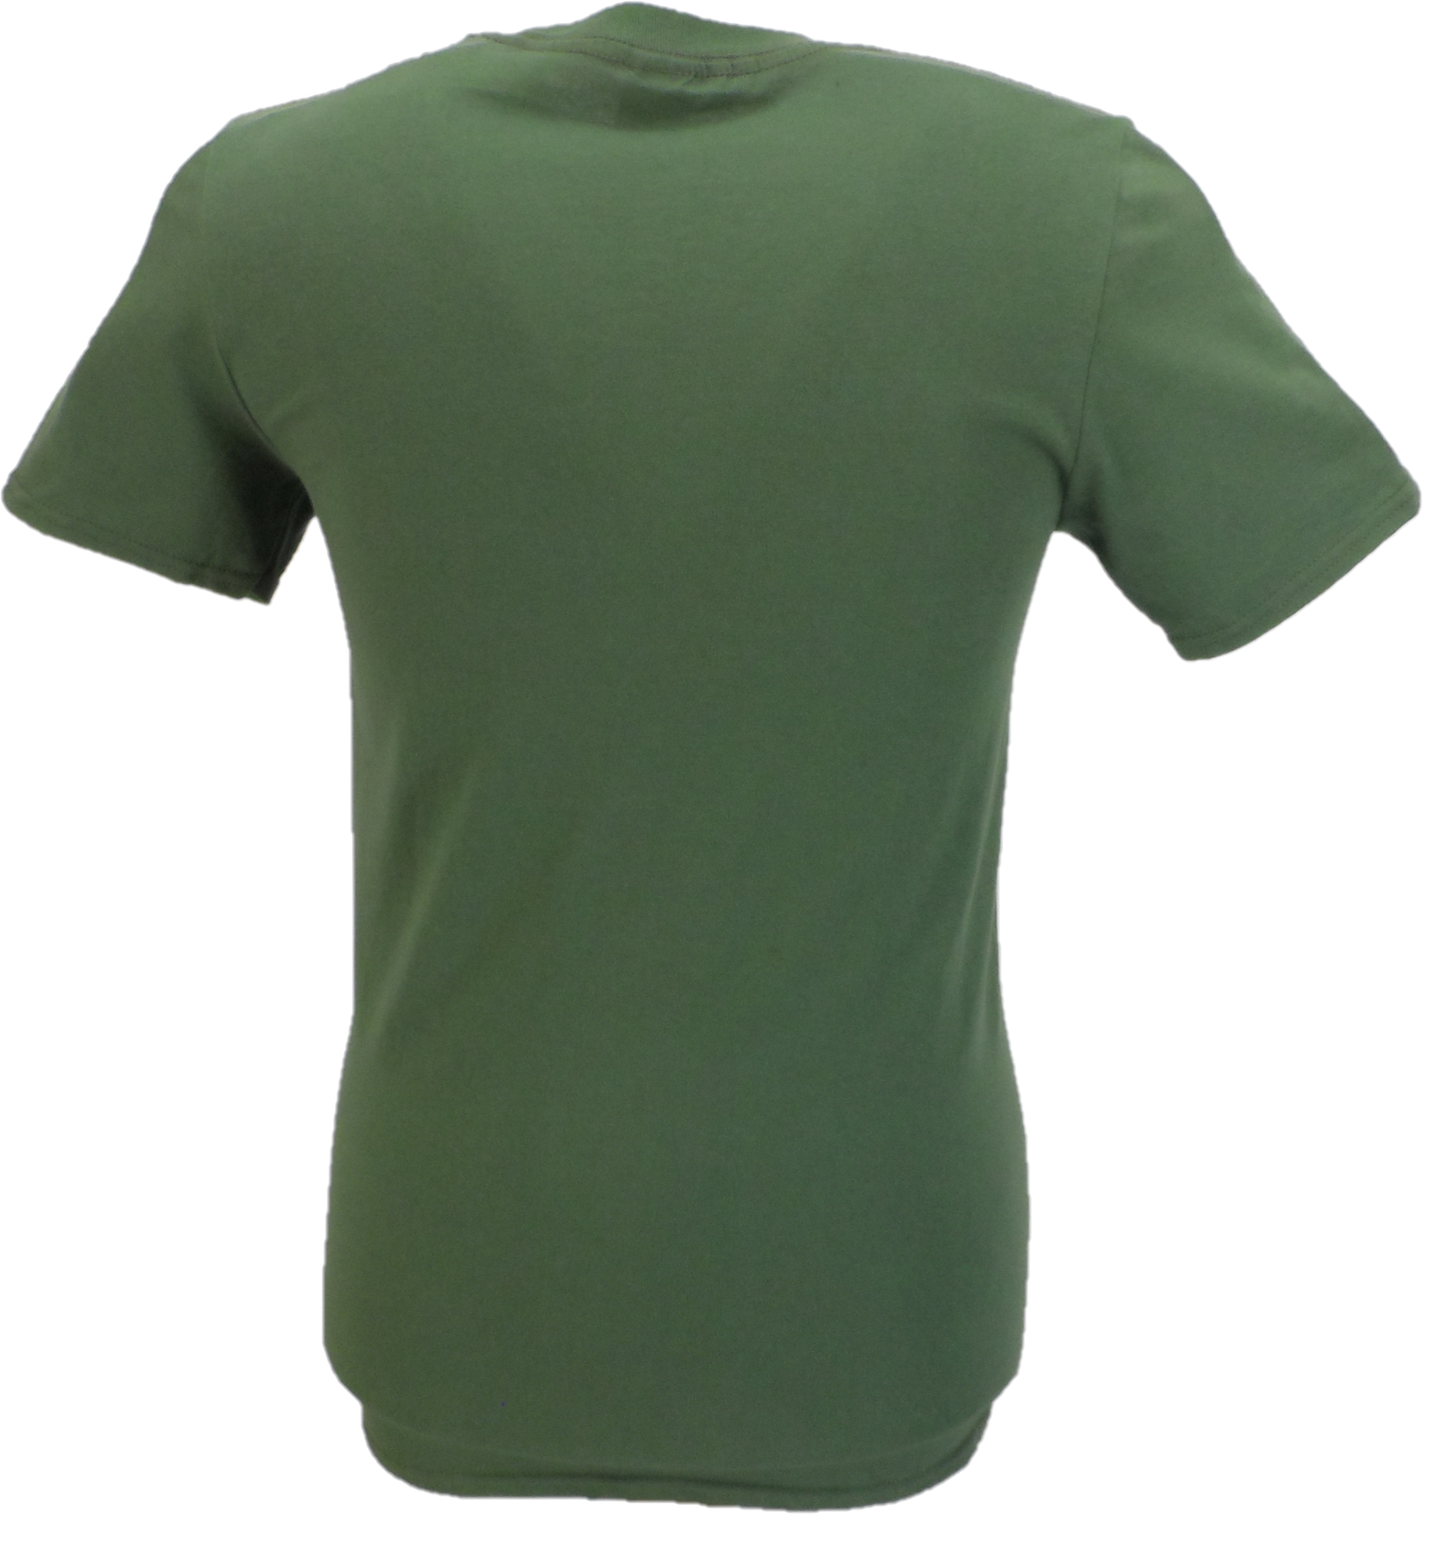 Mens Military Green Official The Specials Block Logo T Shirt